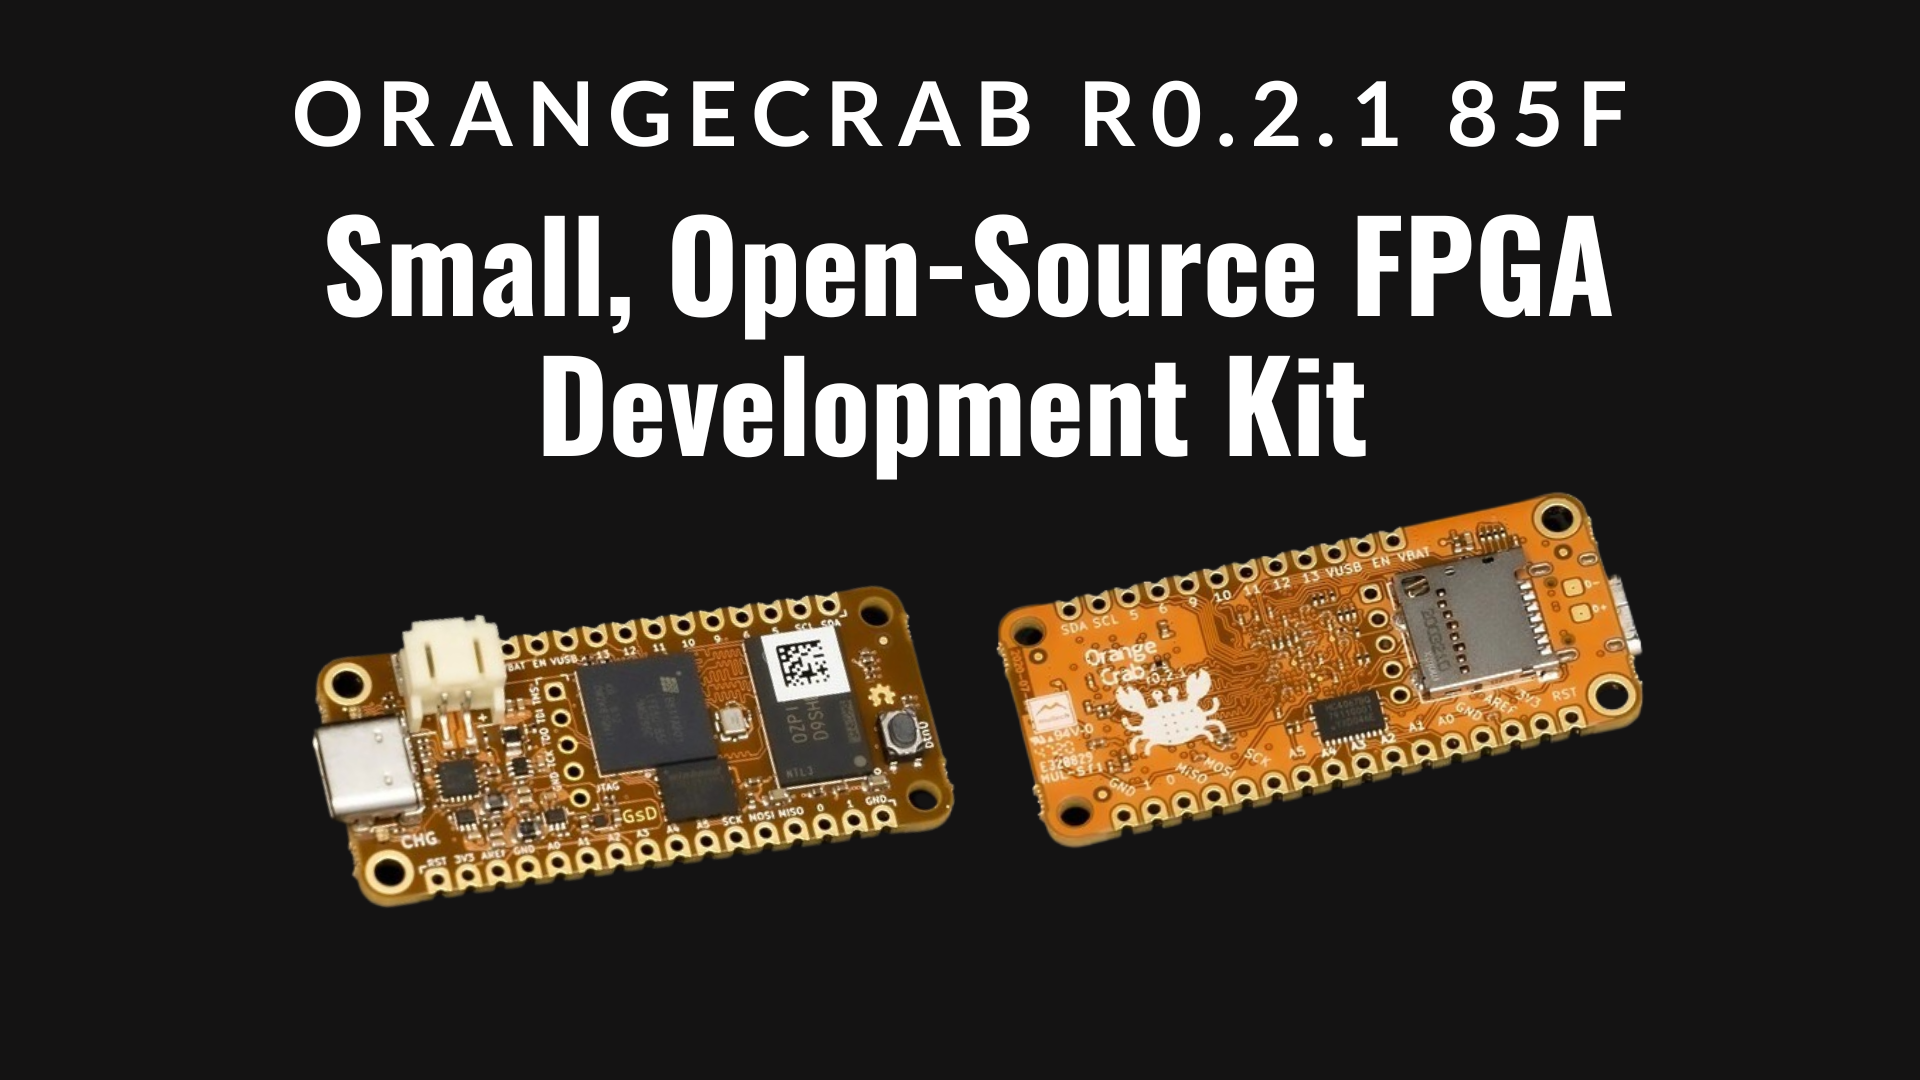 OrangeCrab r0.2.1 85F is a small, open-source FPGA development kit